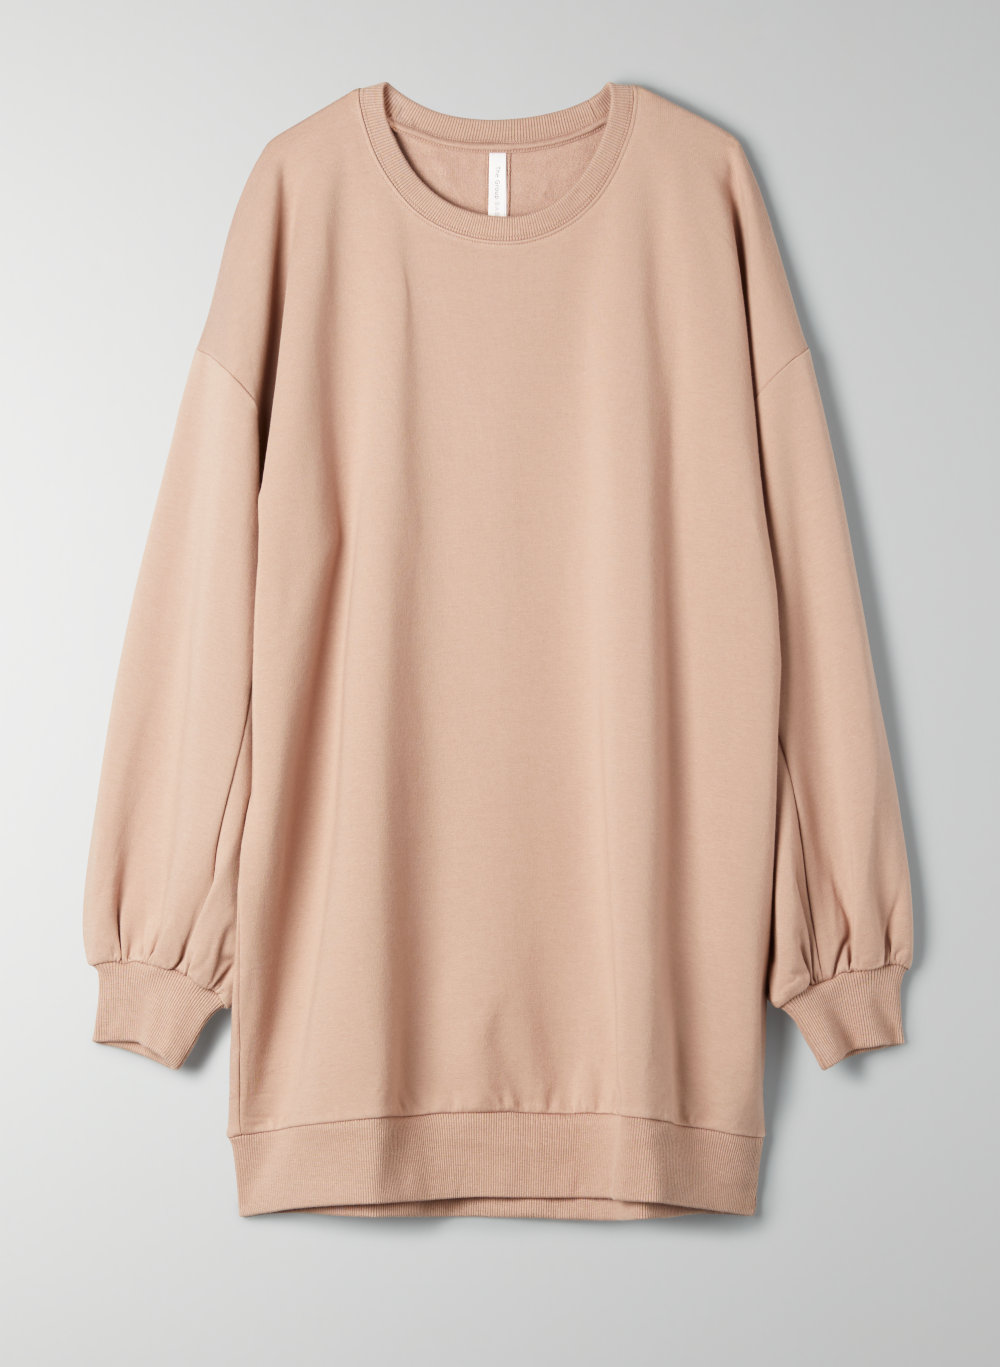 fleece sweater dress